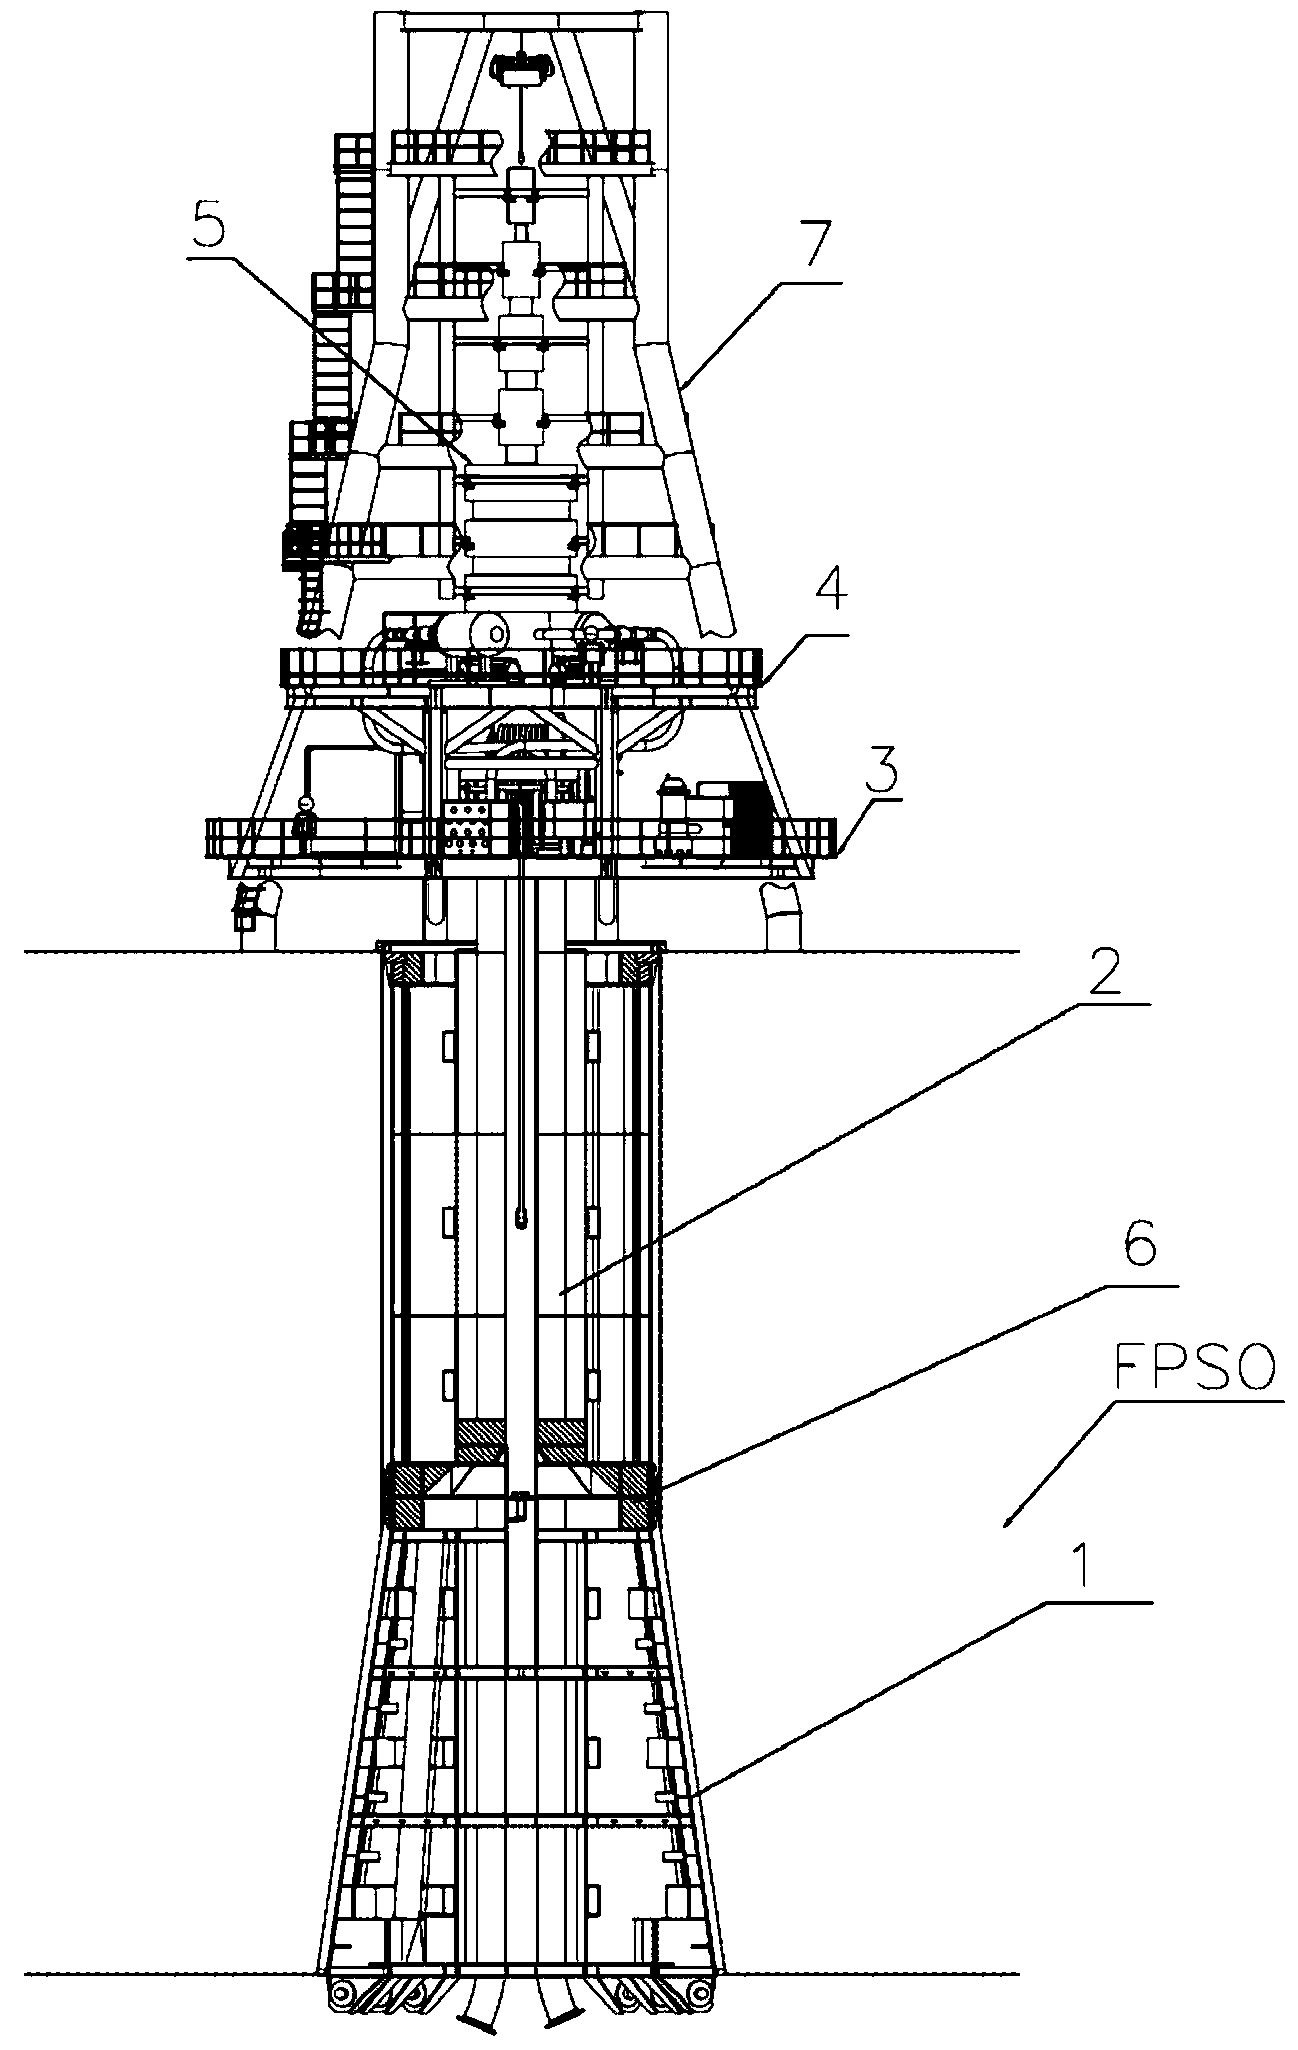 Novel inwards rotation tower single-point mooring device